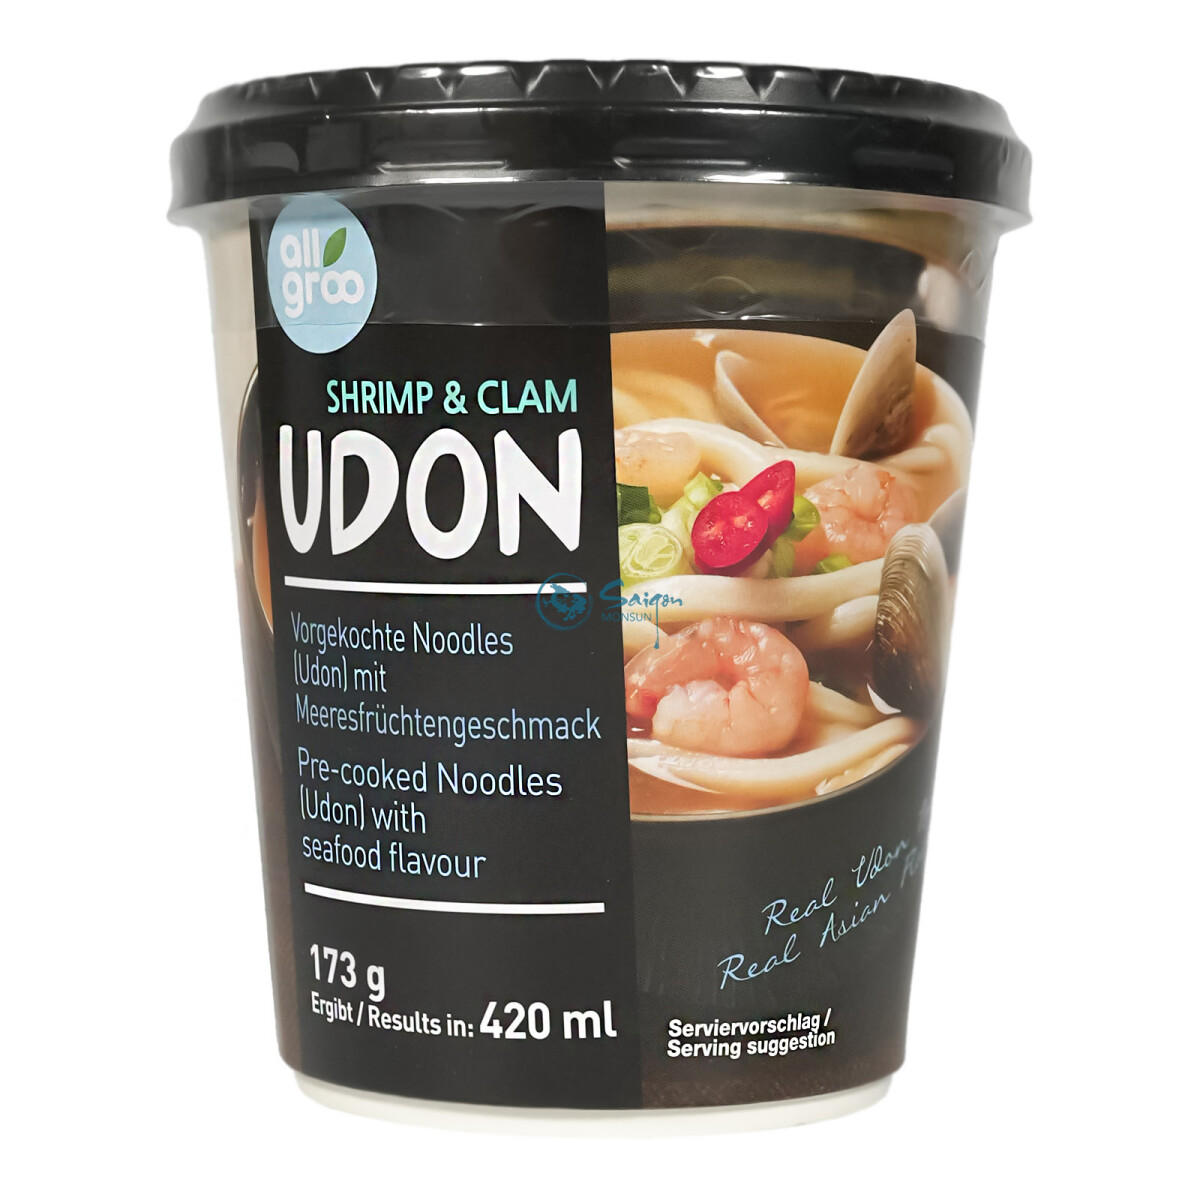 Allgroo Udon Cupnudeln Meeresfrüchte Geschmack 173g